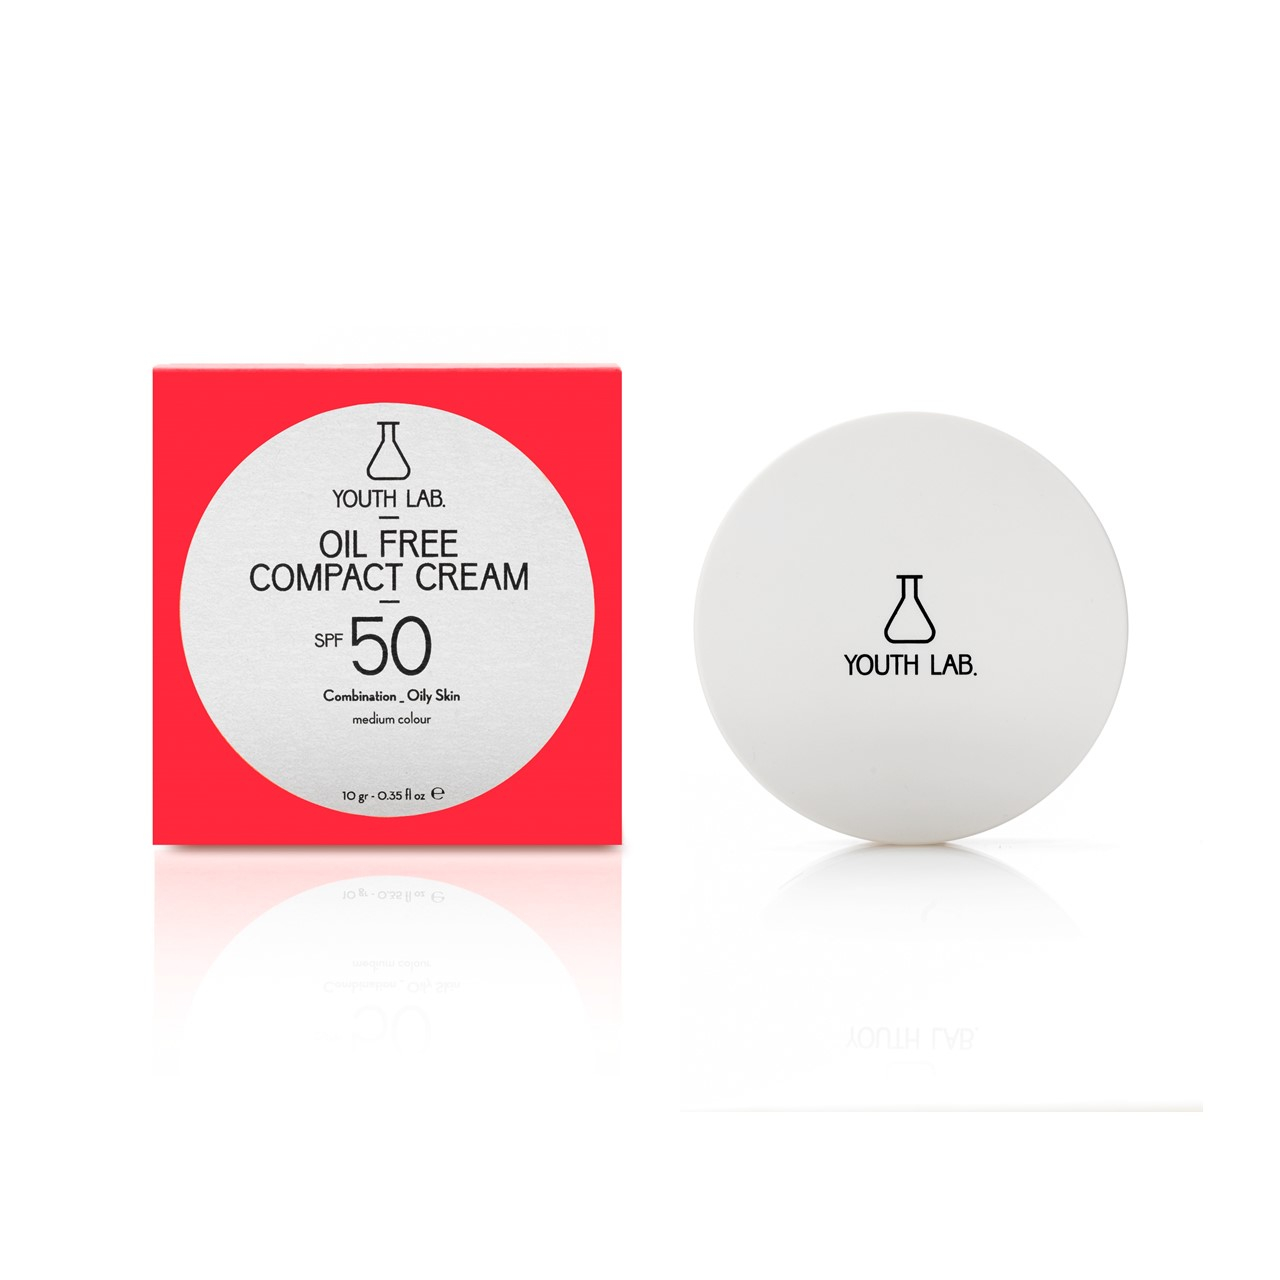 YOUTH LAB Oil Free Compact Cream SPF50 Medium 10g (0.35oz)